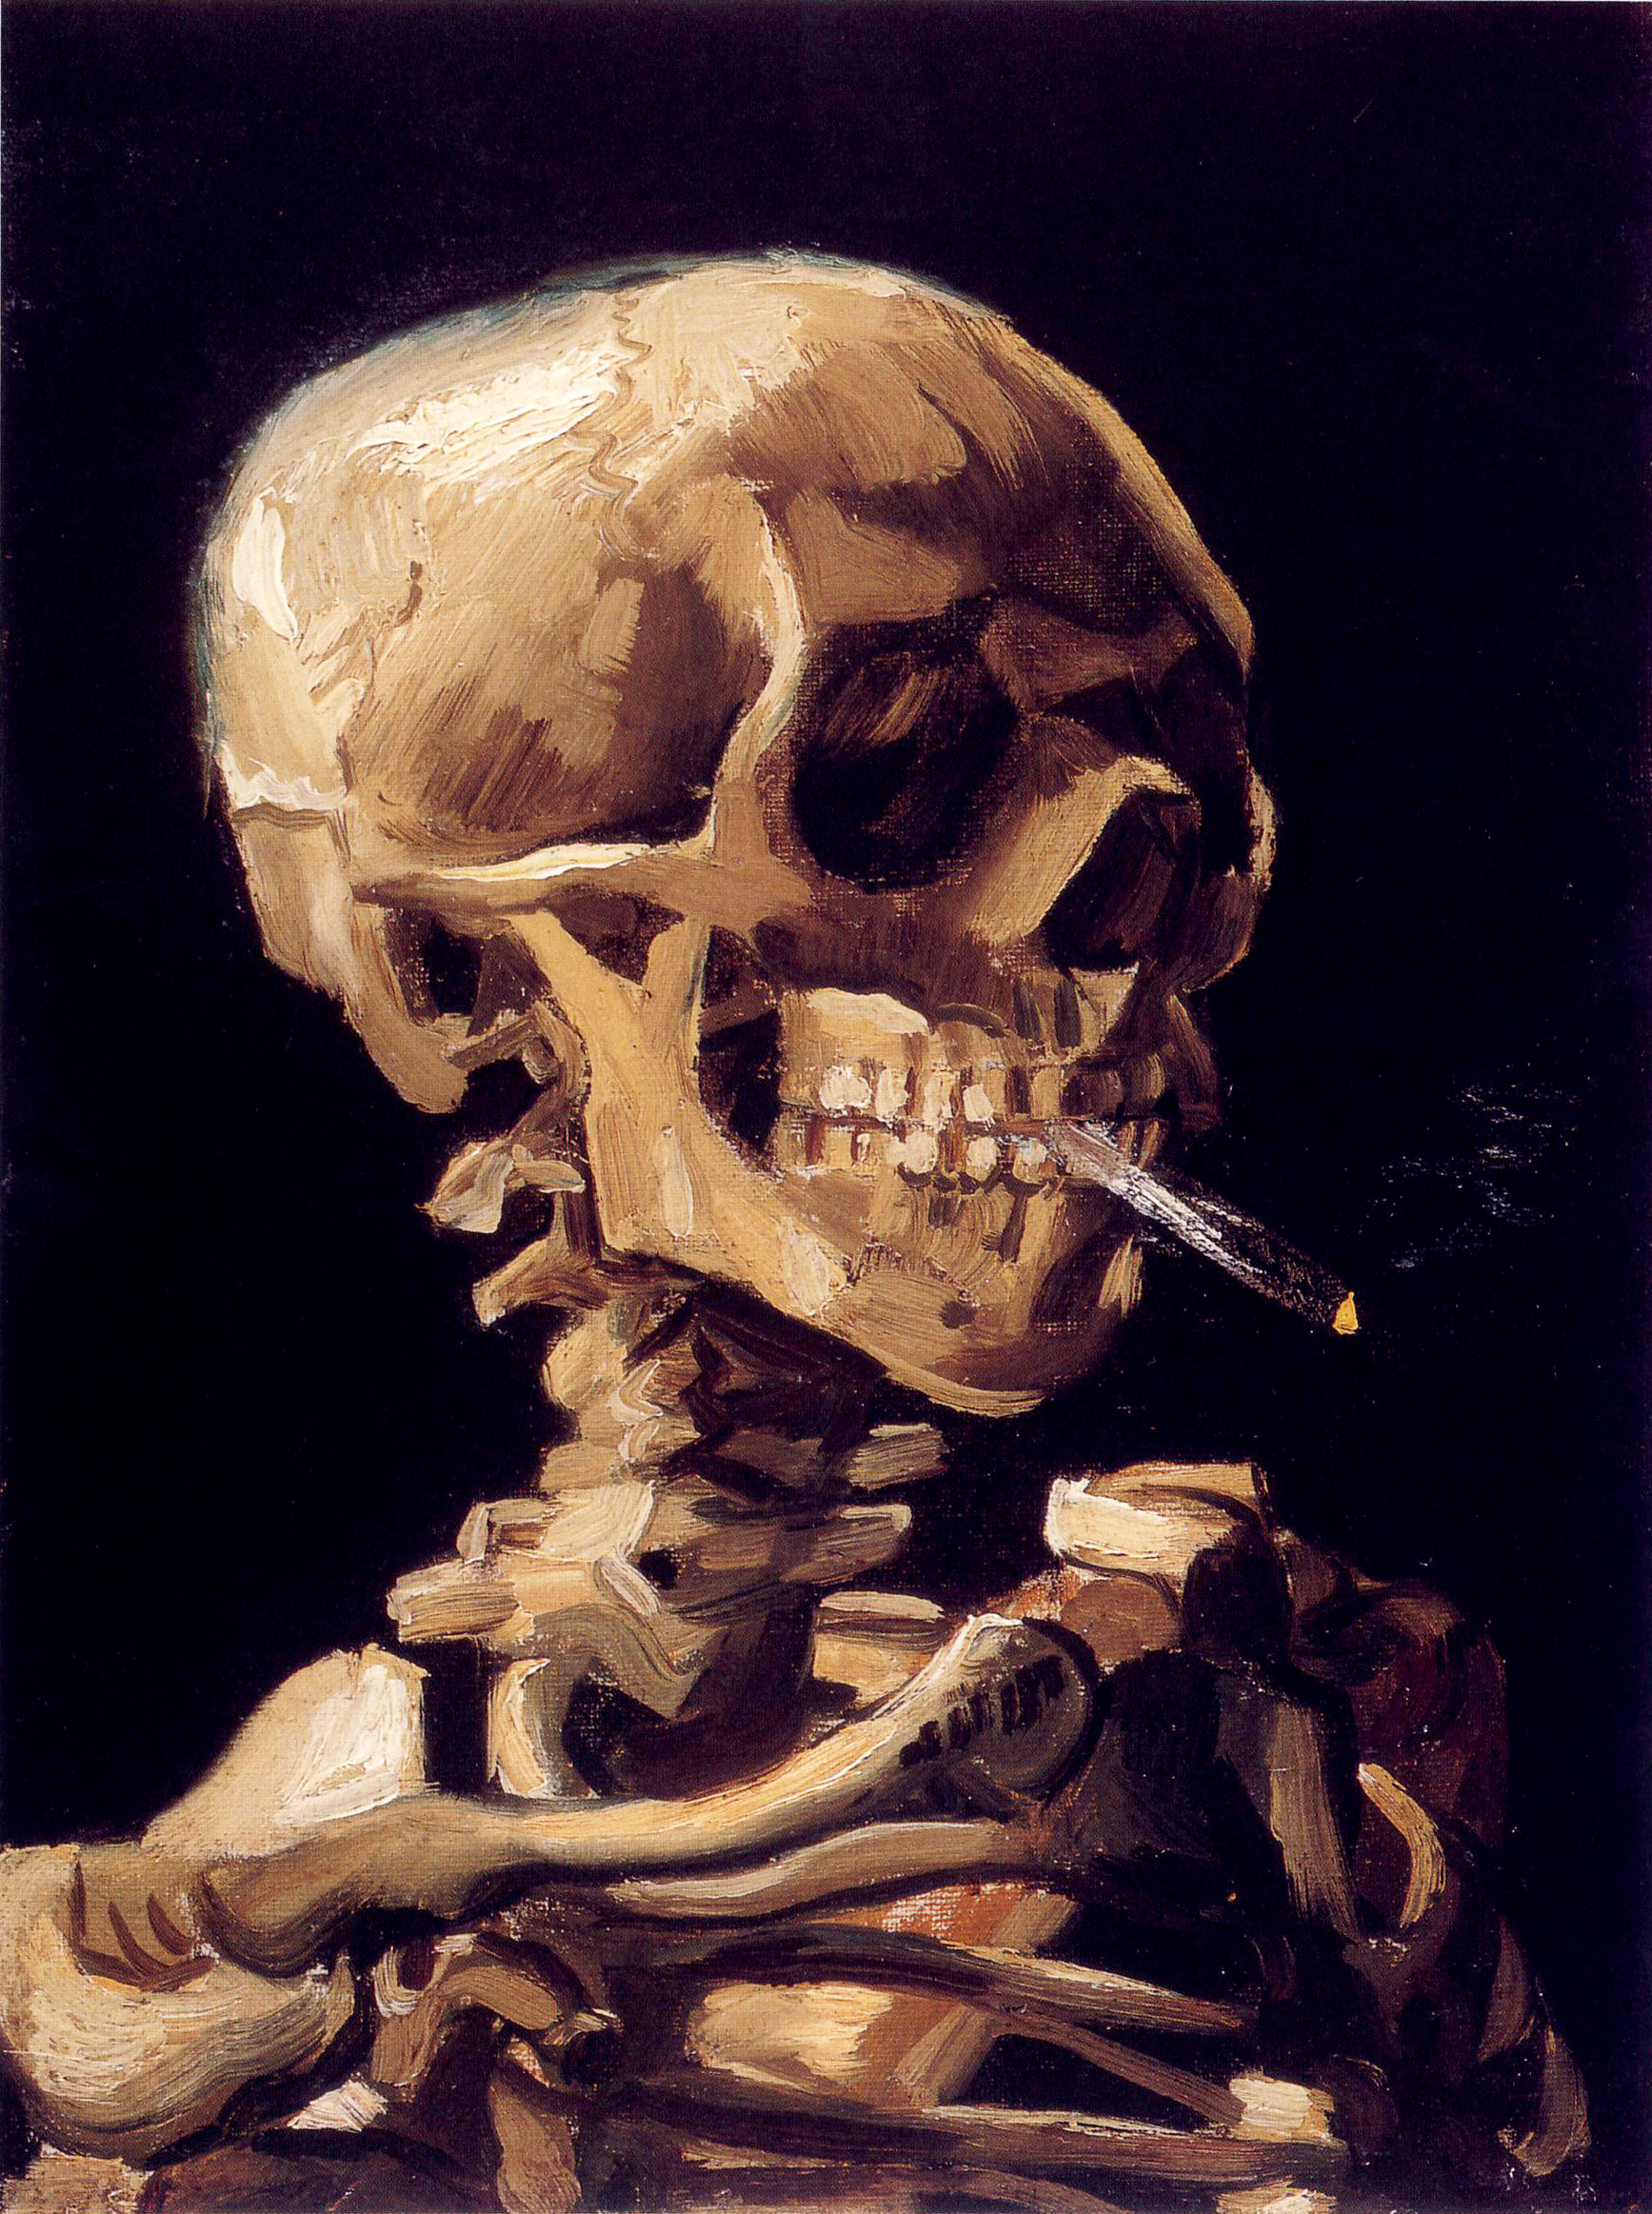 File:Van Gogh - Skull with a burning cigarette.jpg - Wikipedia